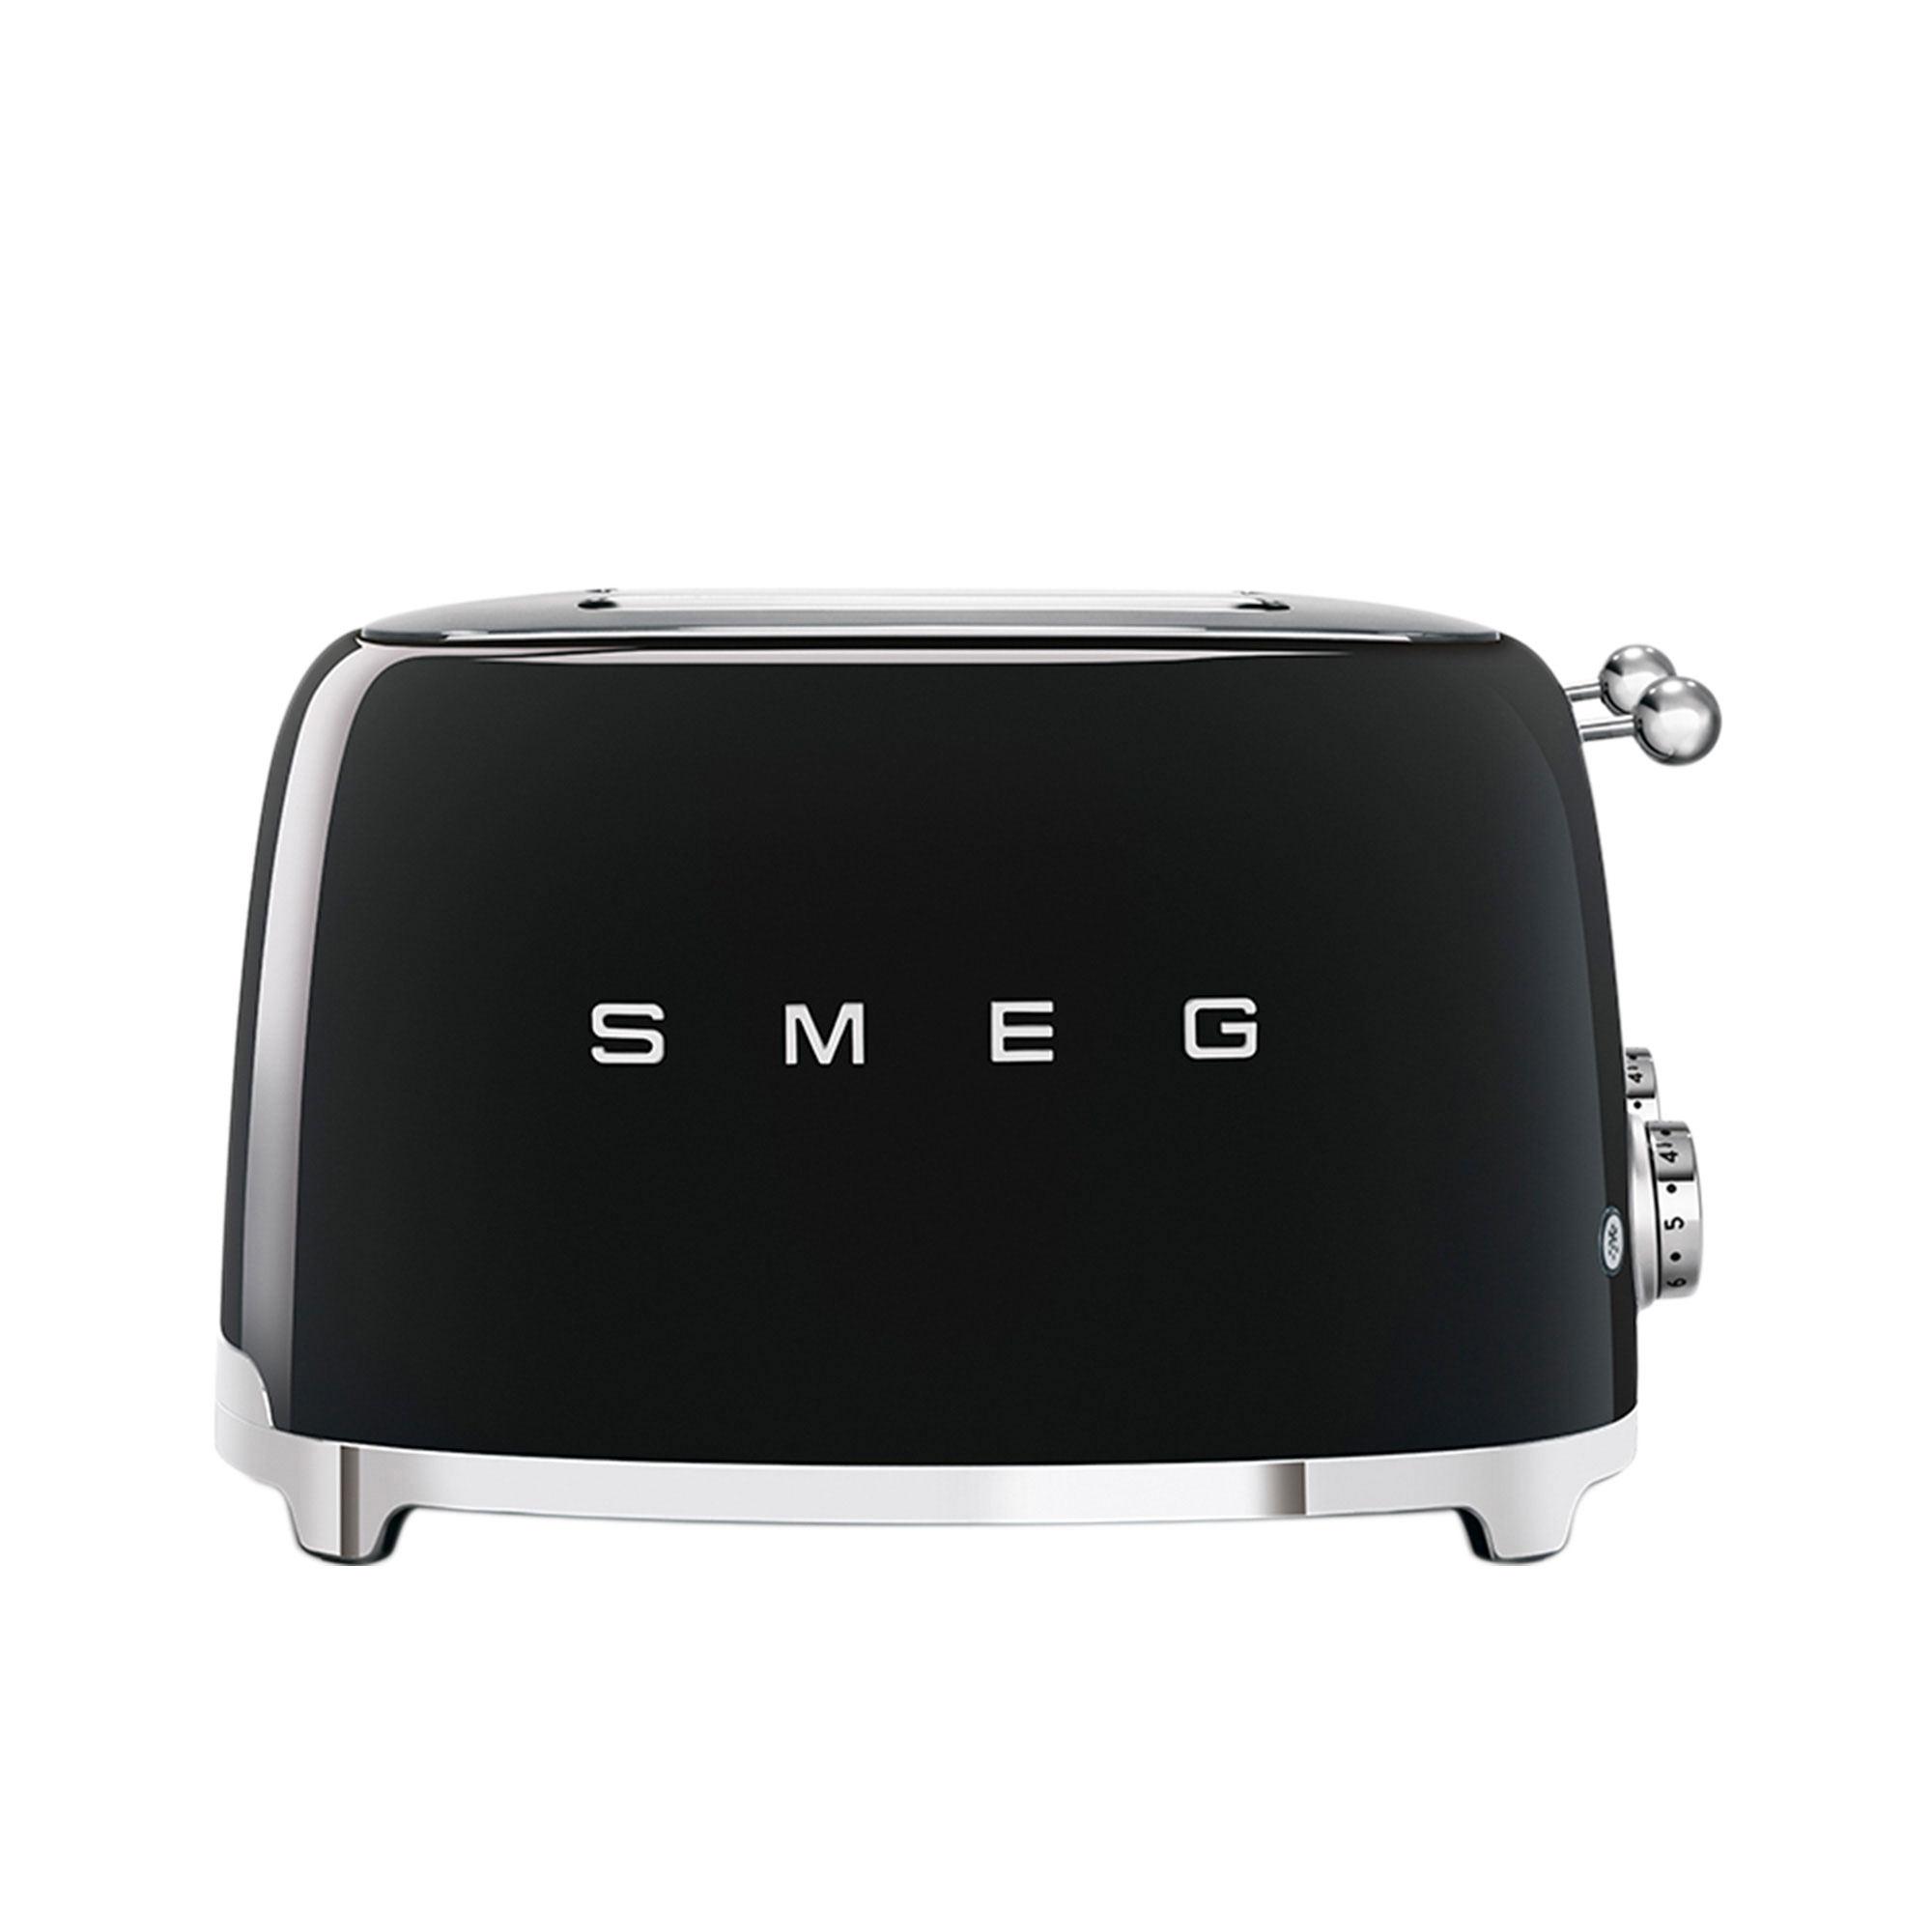 Smeg 50's Retro Style 4 Slot Toaster Black Image 5